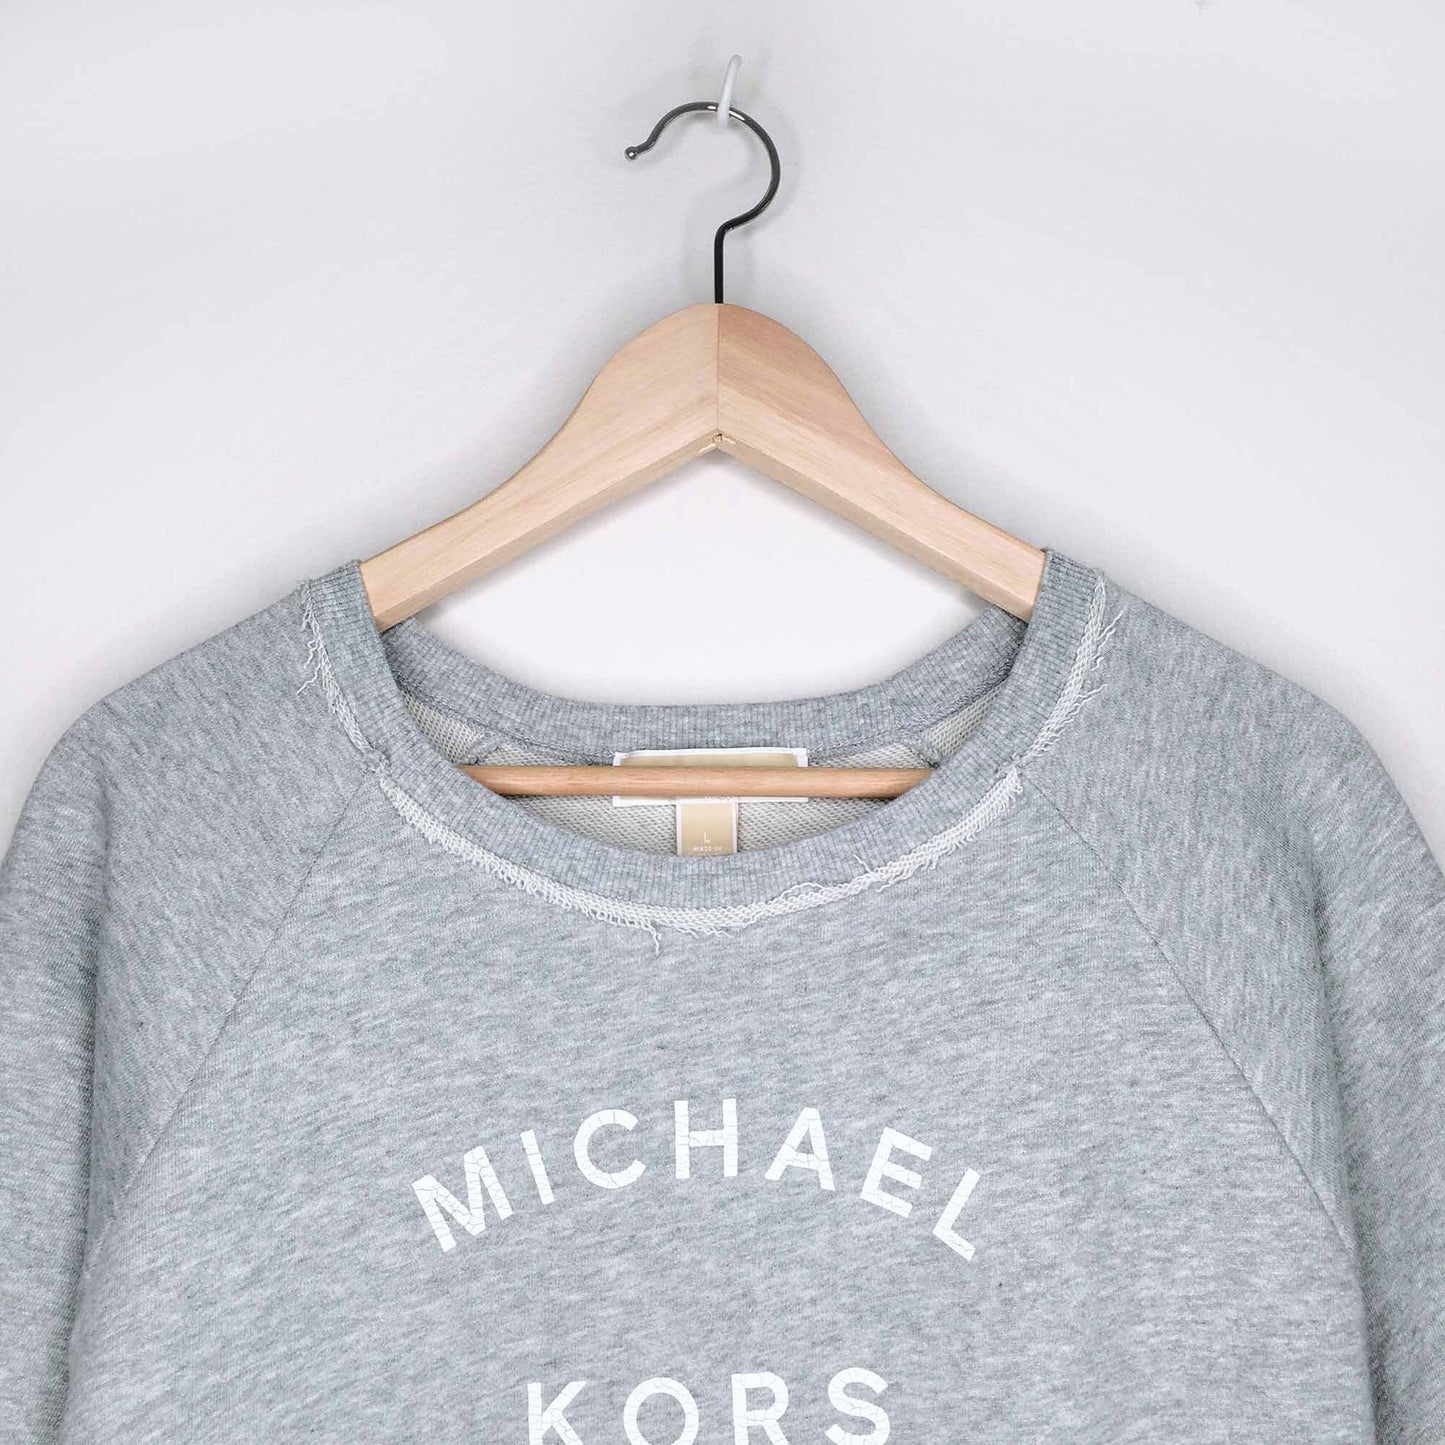 Michael Kors short sleeve raw edge sweatshirt - size Large